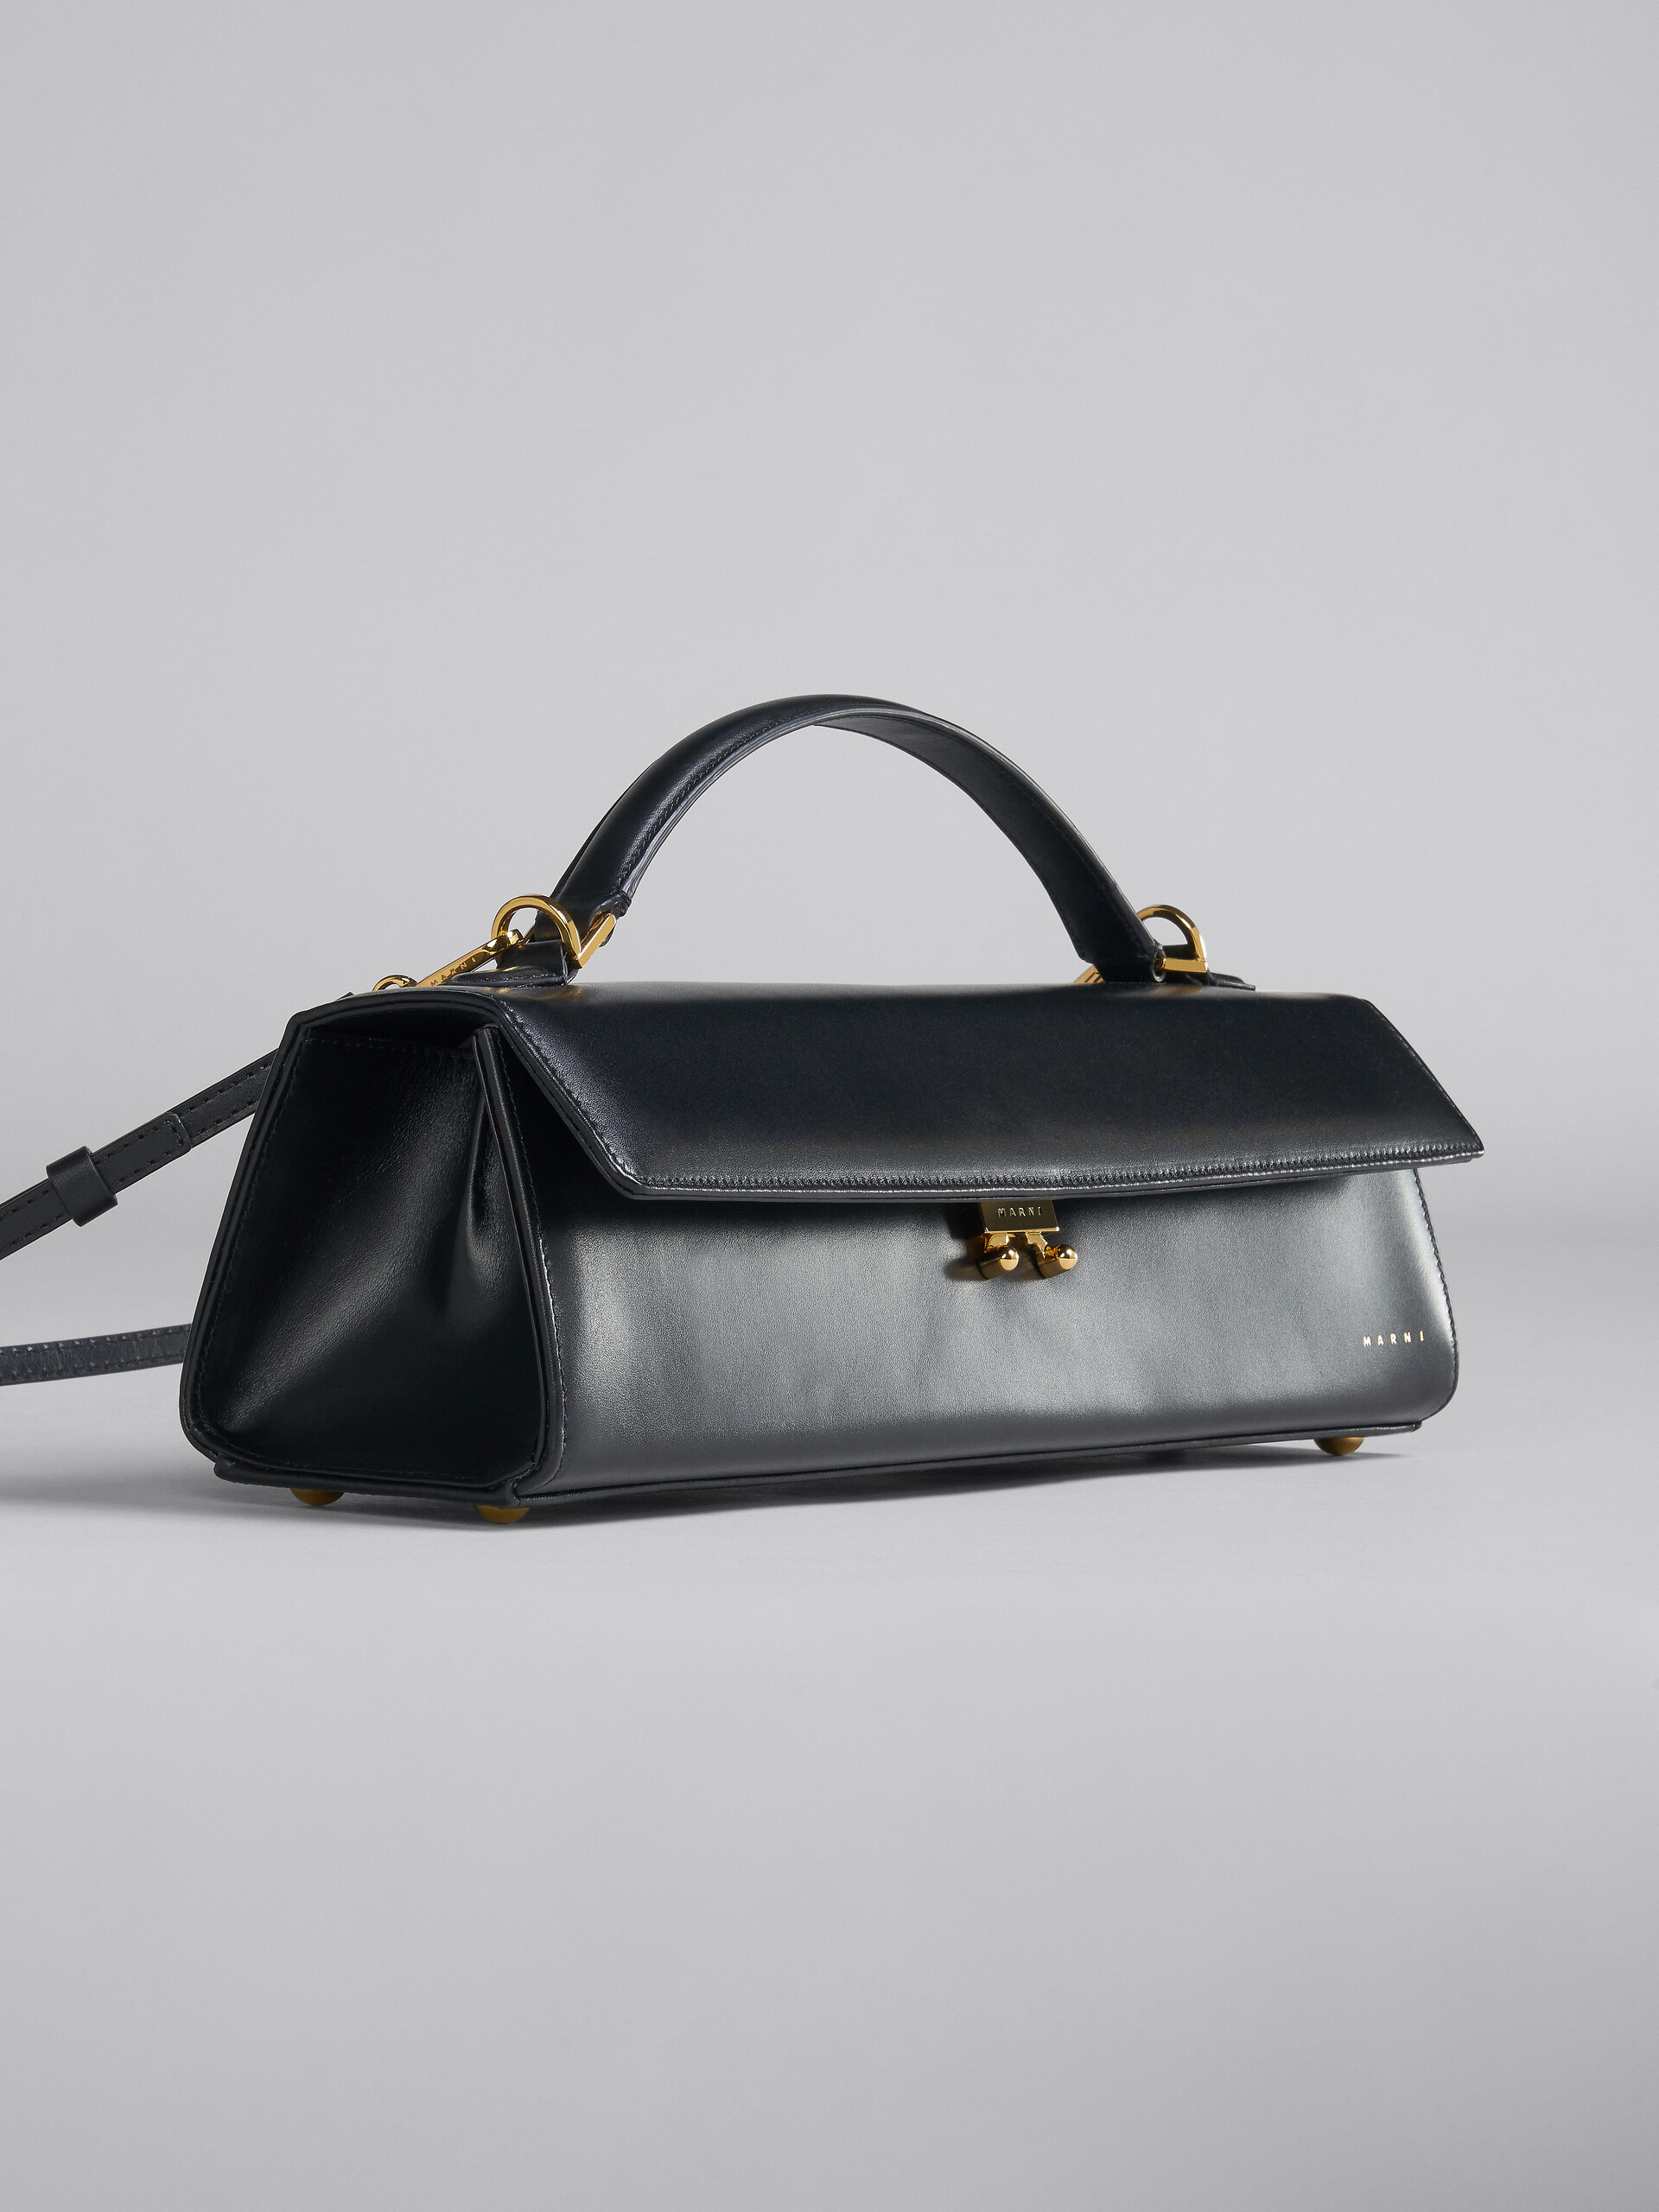 Relativity Large Bag in black leather - Handbag - Image 5